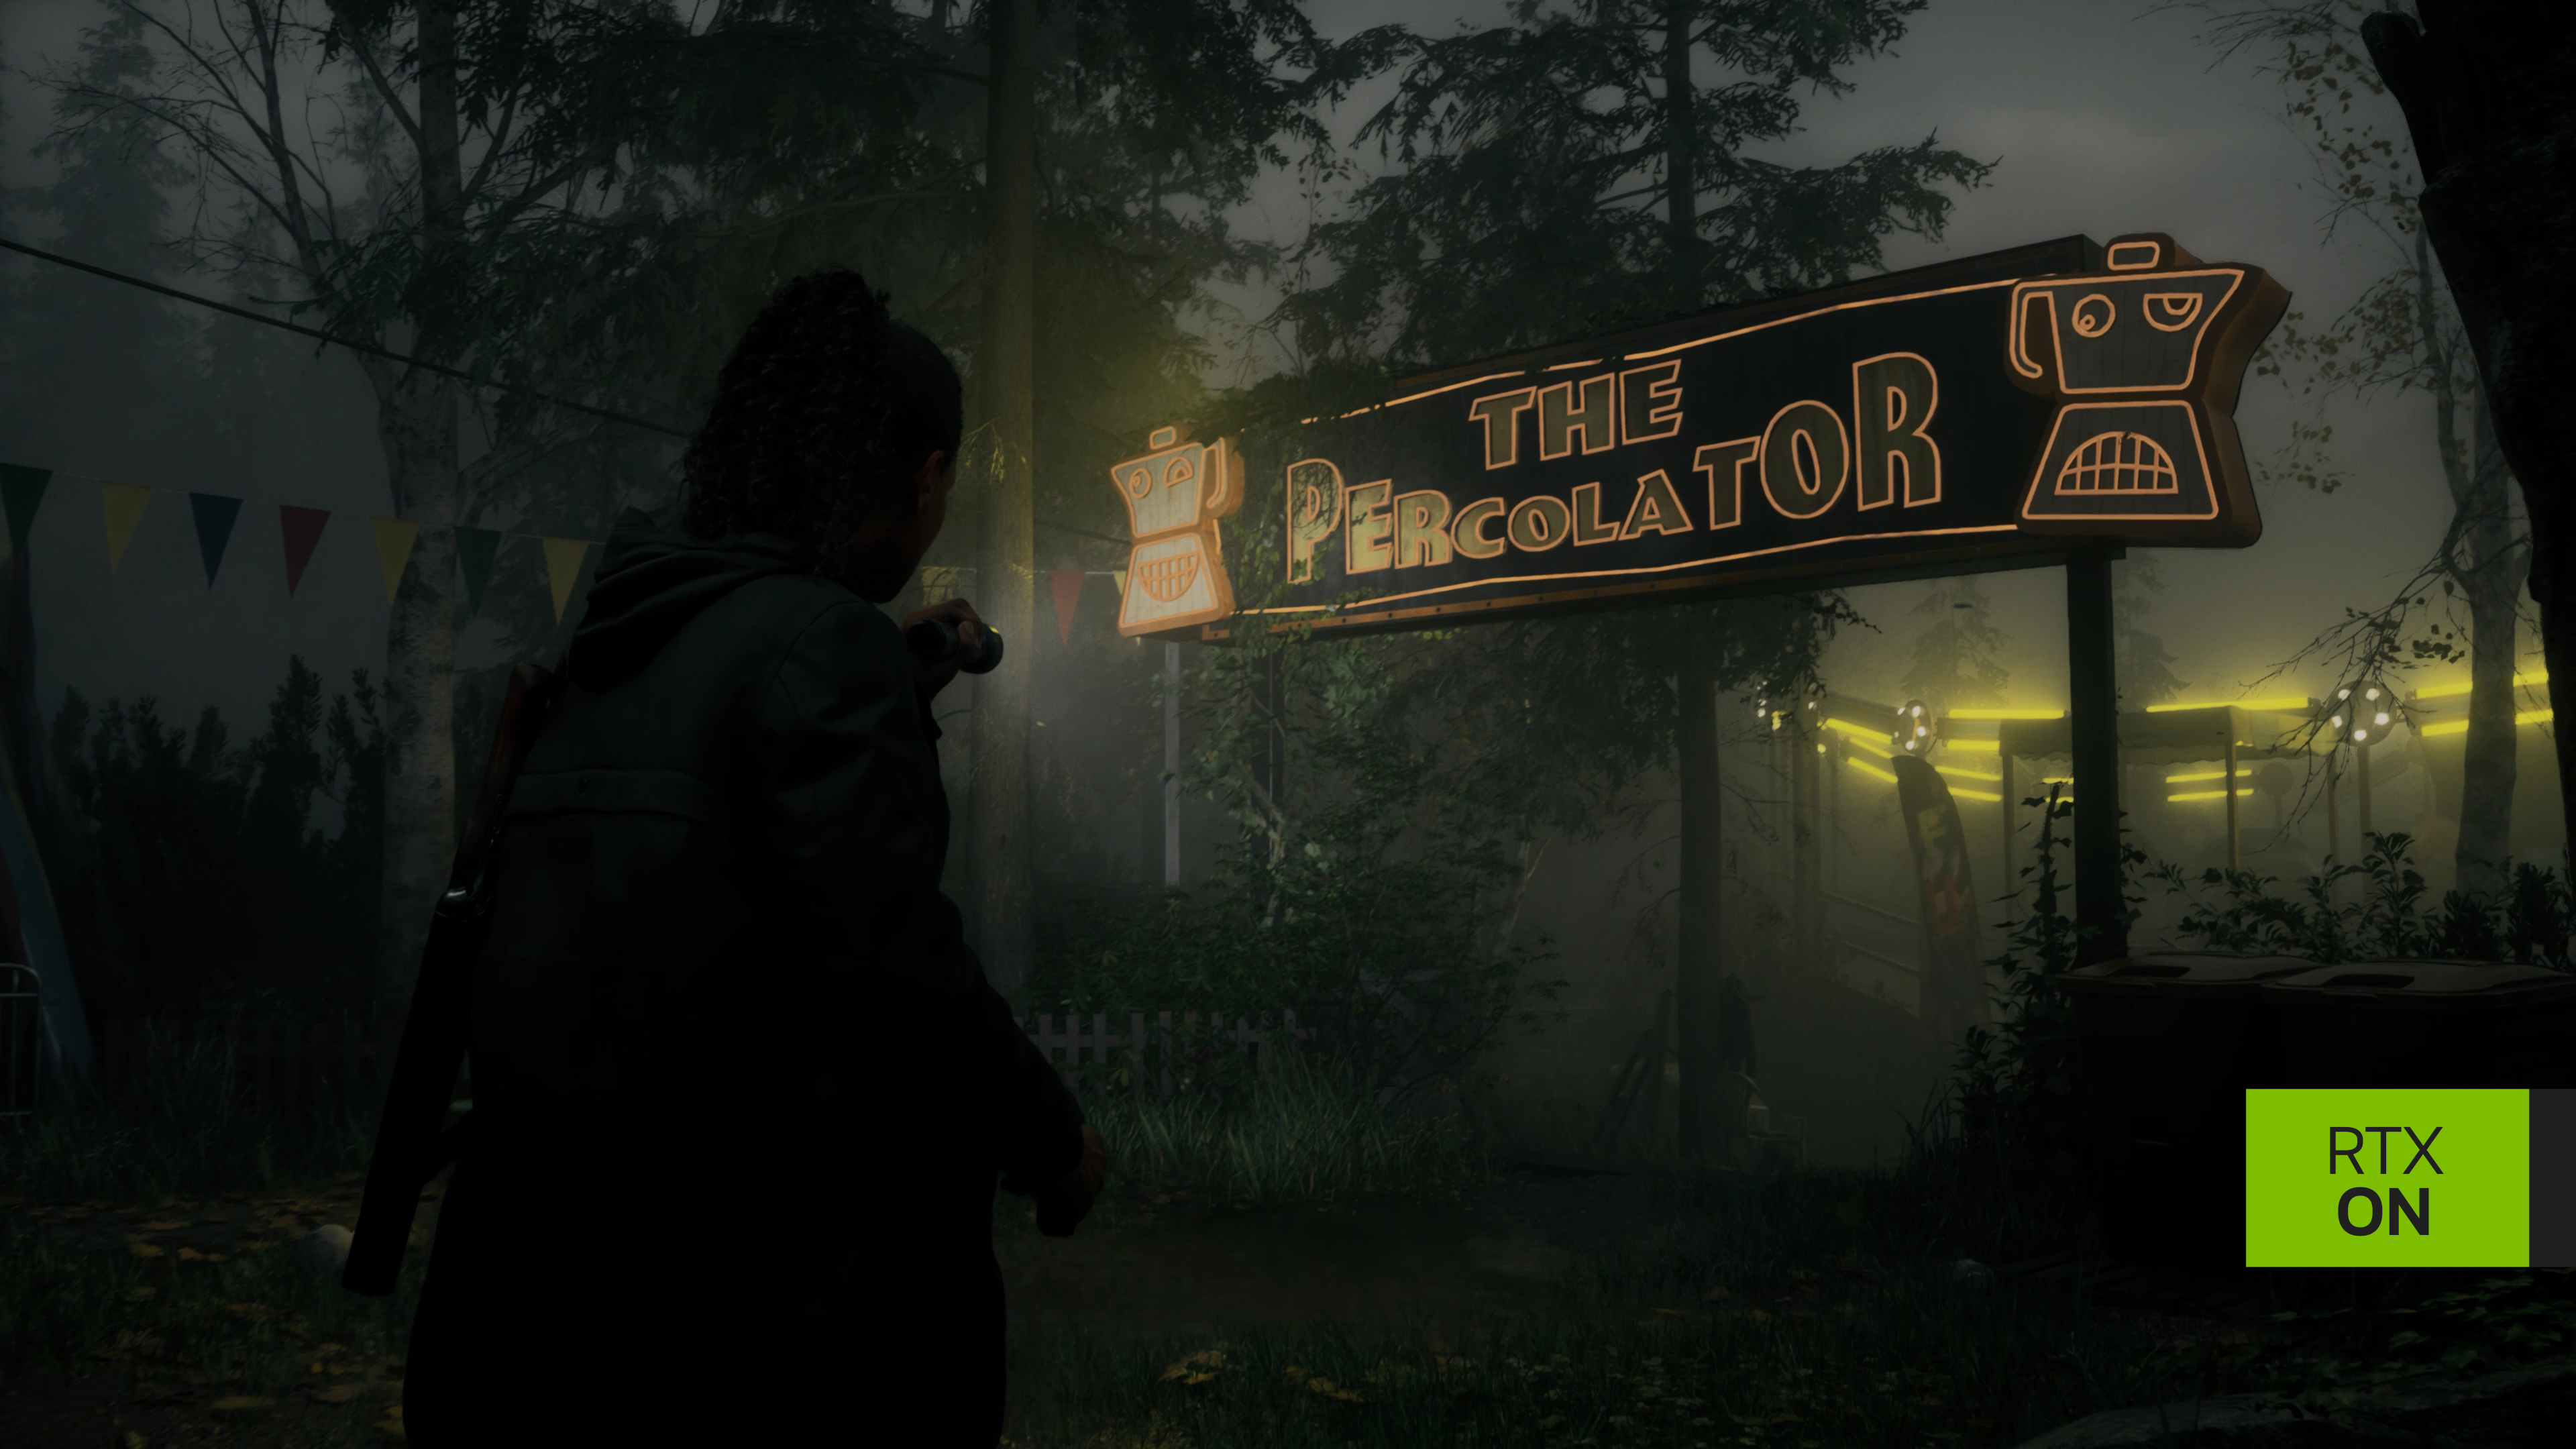 Alan Wake 2 hands-on report: illuminating new gameplay details